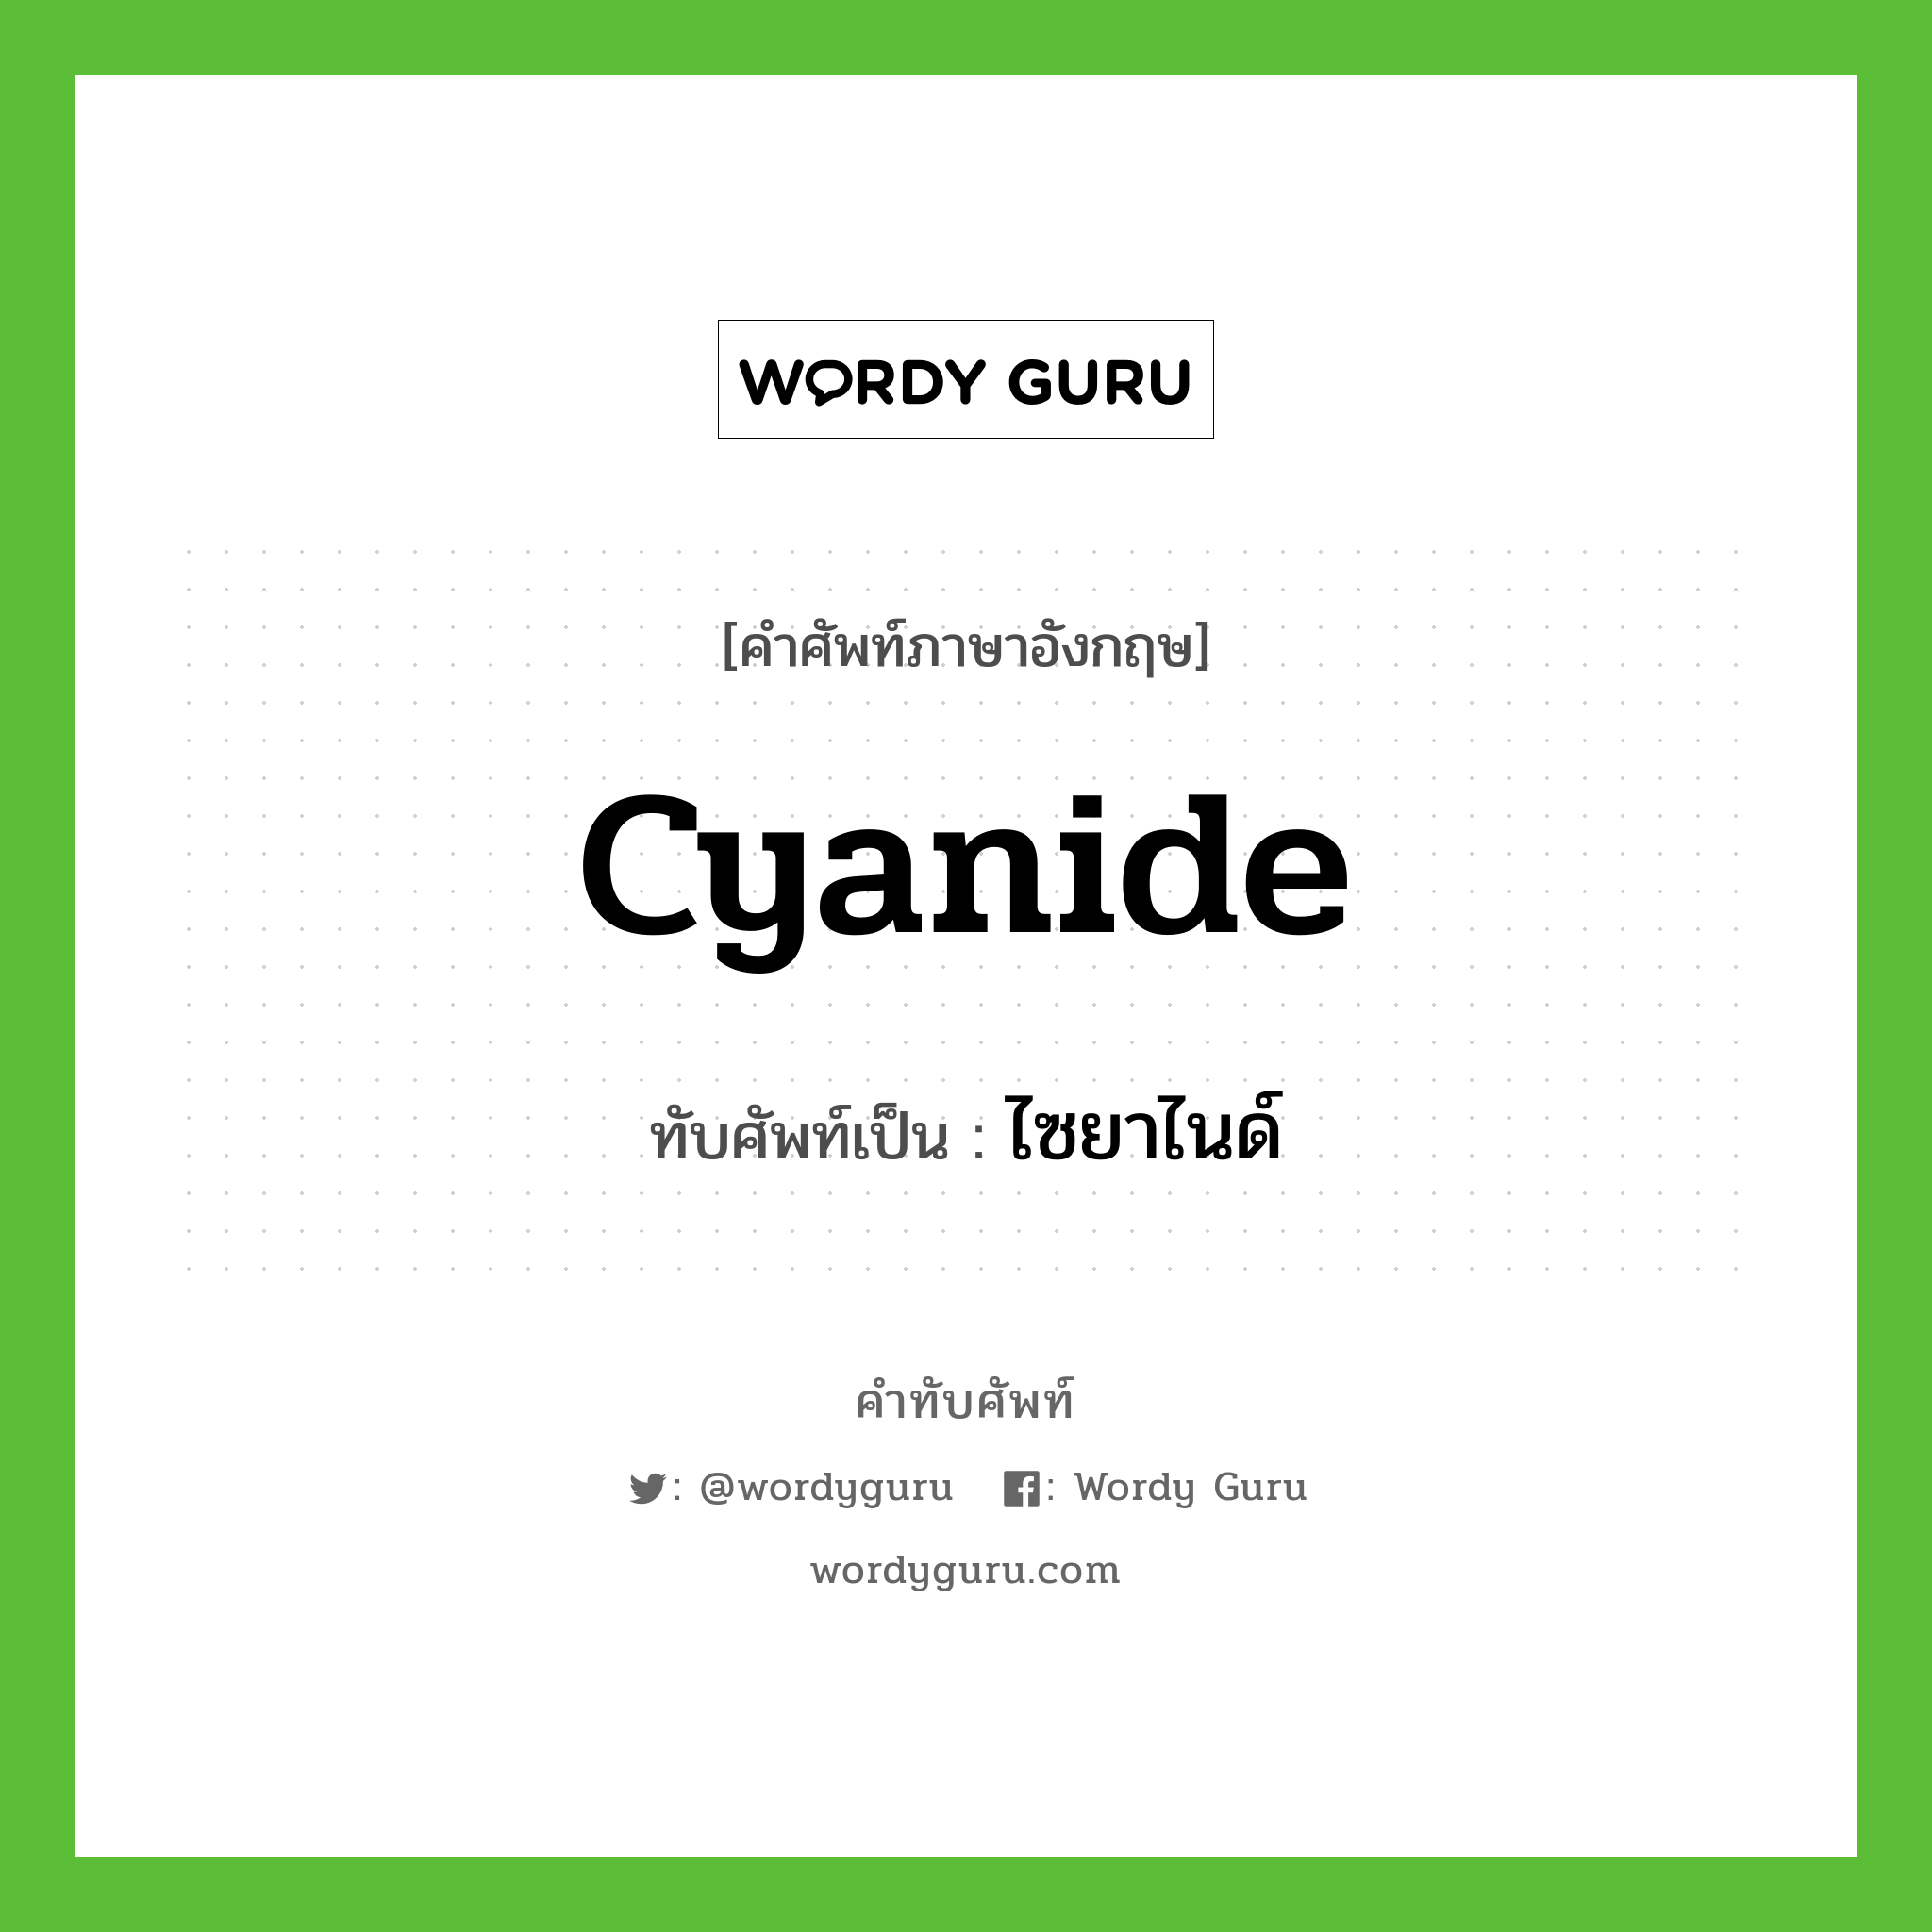 cyanide เขียนเป็นคำไทยว่าอะไร?, คำศัพท์ภาษาอังกฤษ cyanide ทับศัพท์เป็น ไซยาไนด์